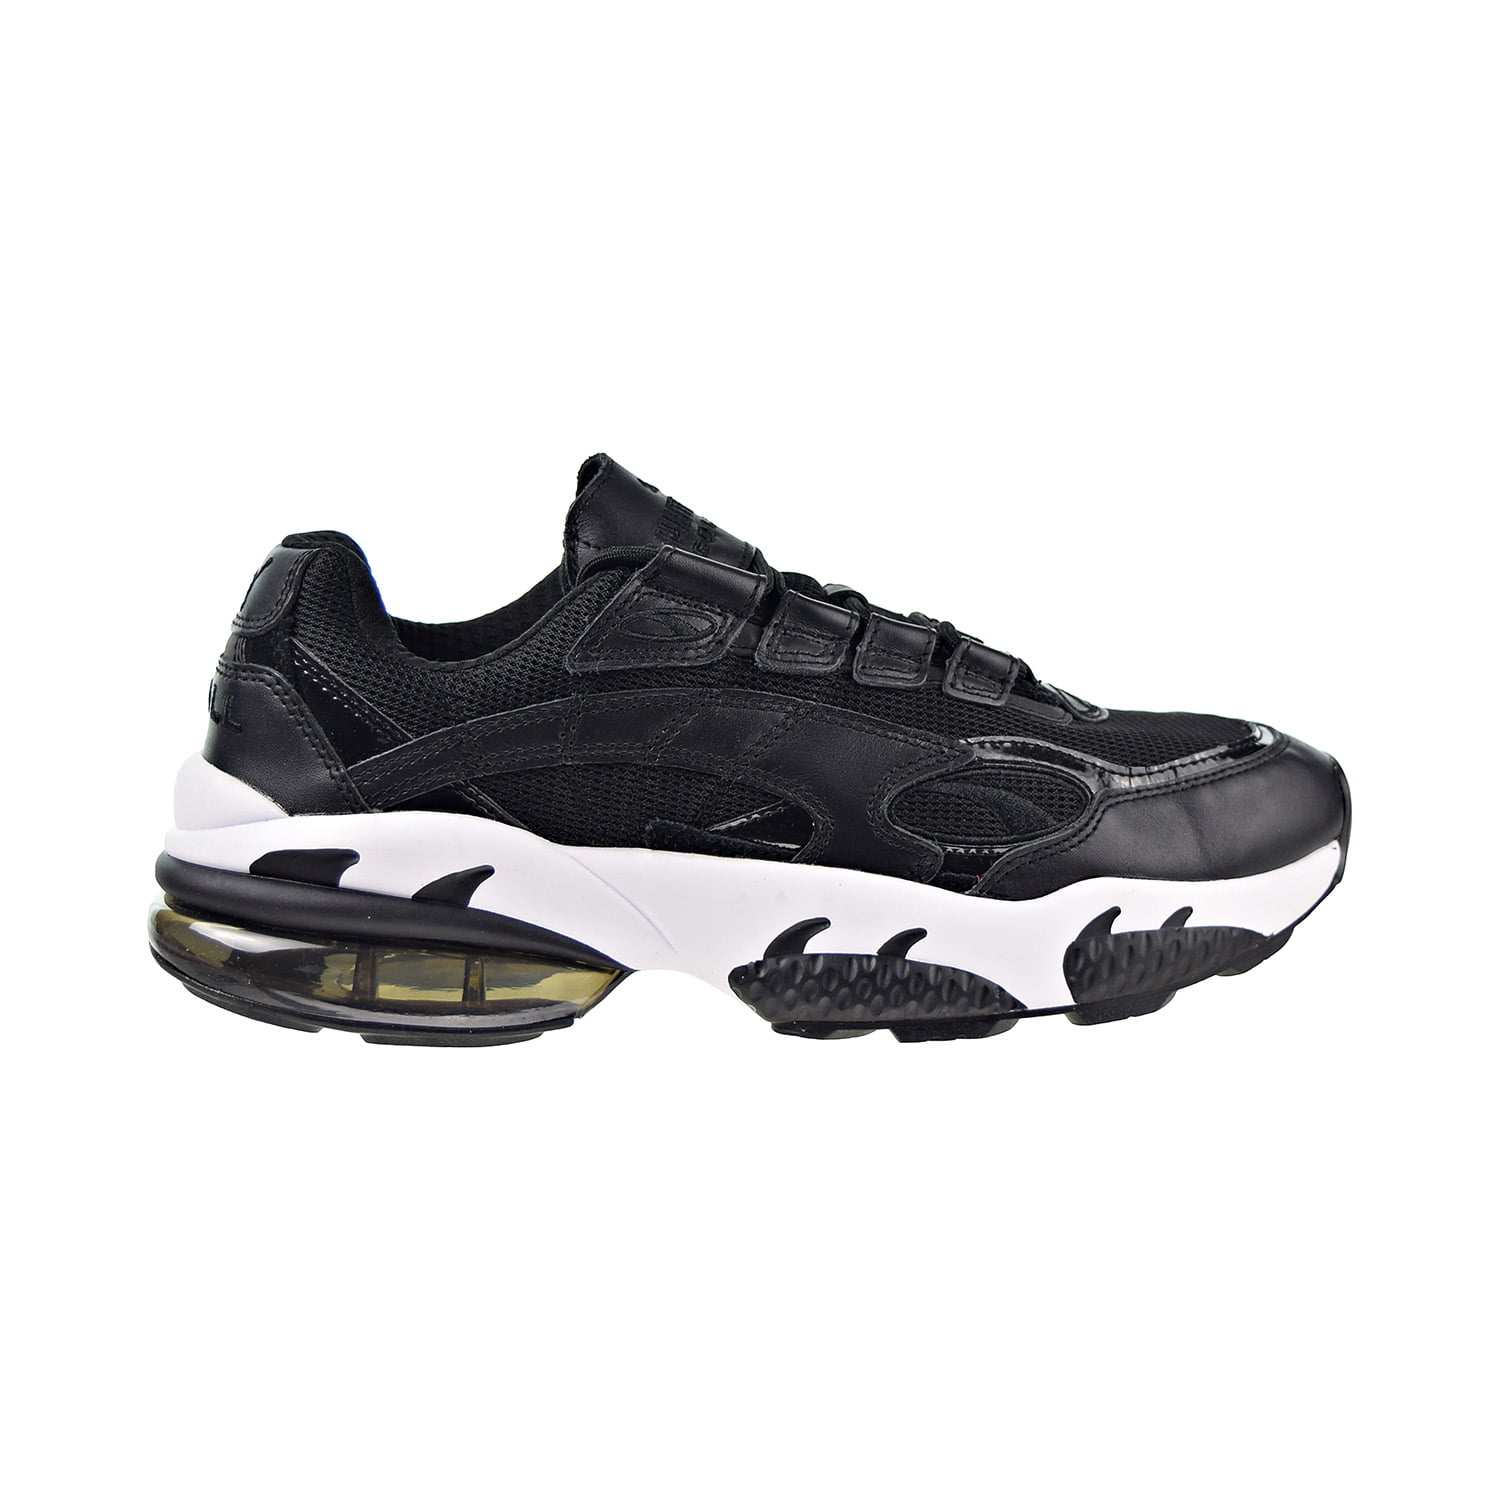 Puma Cell Venom Reflective Men's Shoes Black-White 369701-01 - Walmart.com